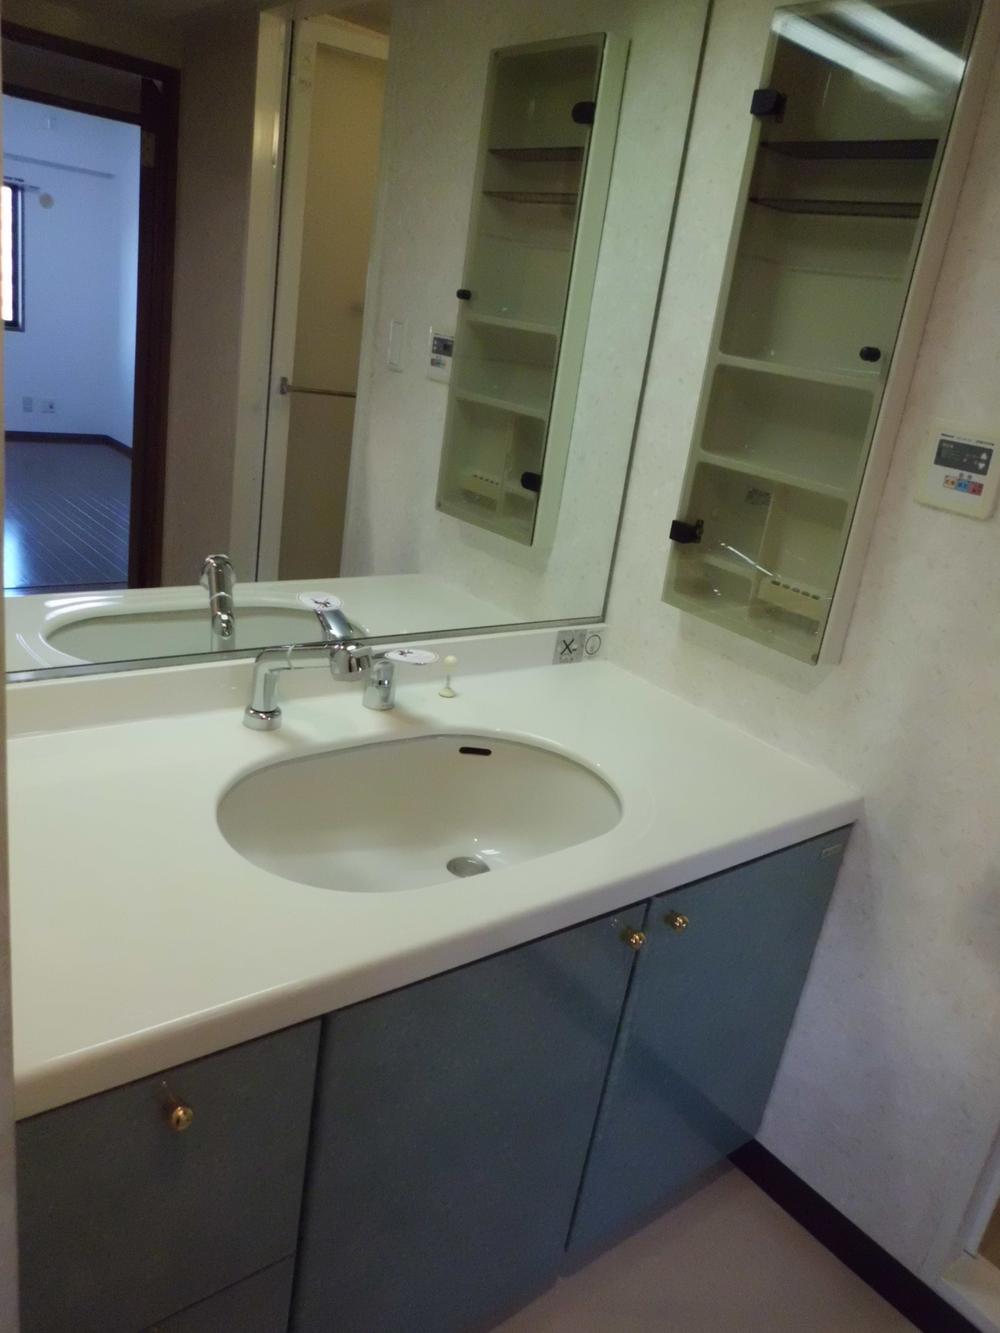 Wash basin, toilet. Washroom (December 2013) Shooting